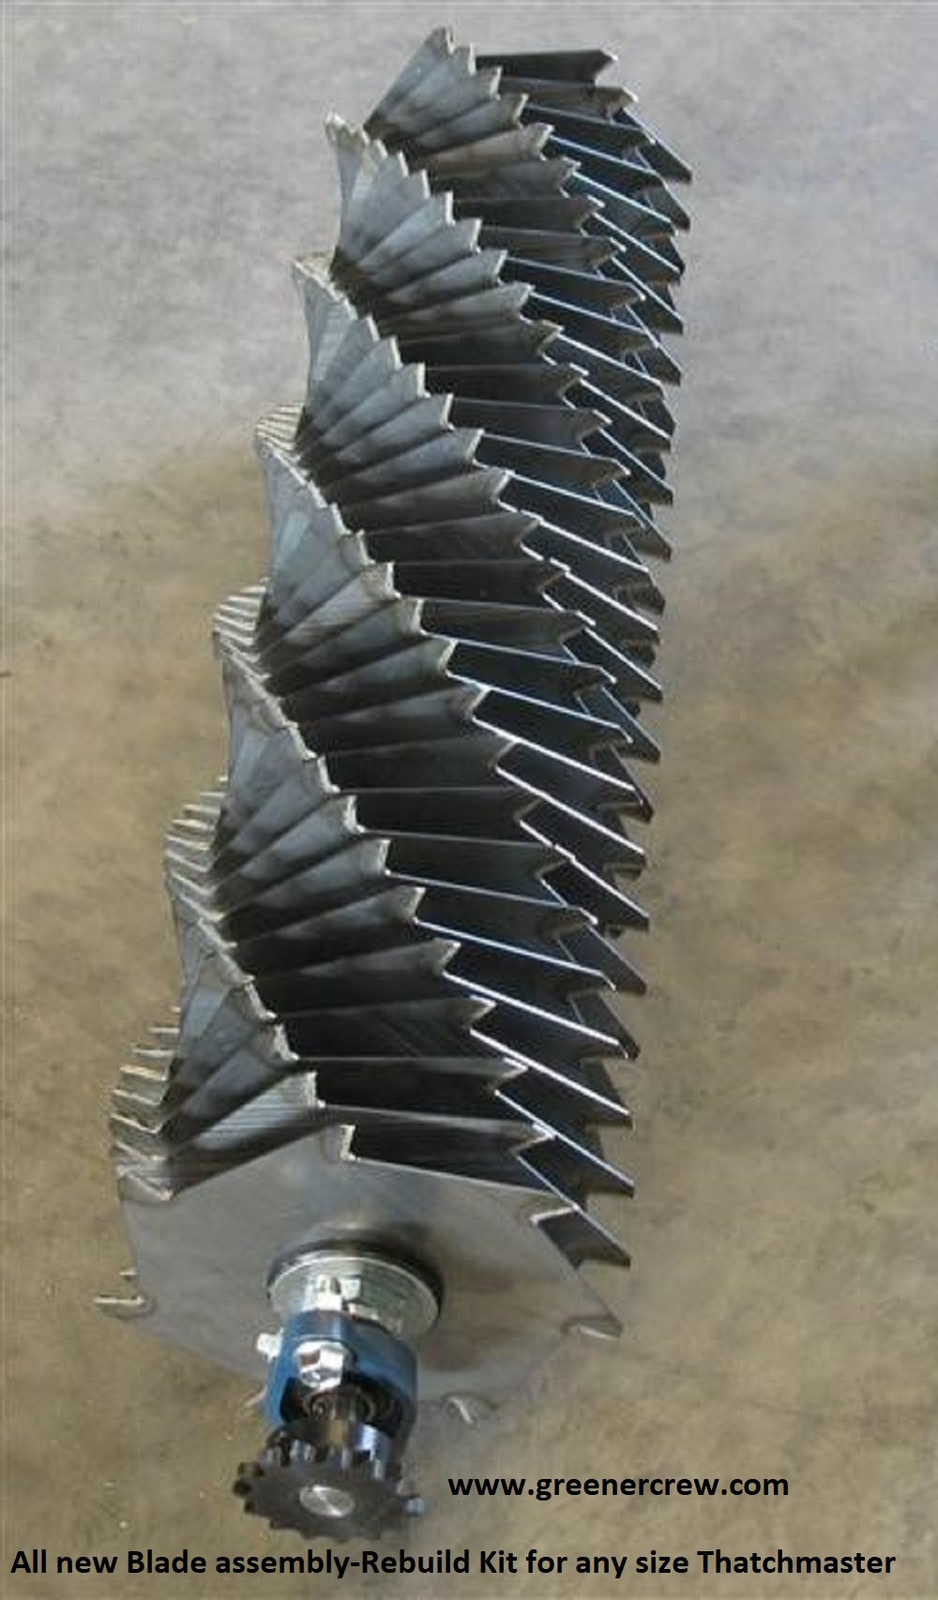 Blade assembly-Rebuild Kit Verti-cutter Thatch Master  - $2,420.00